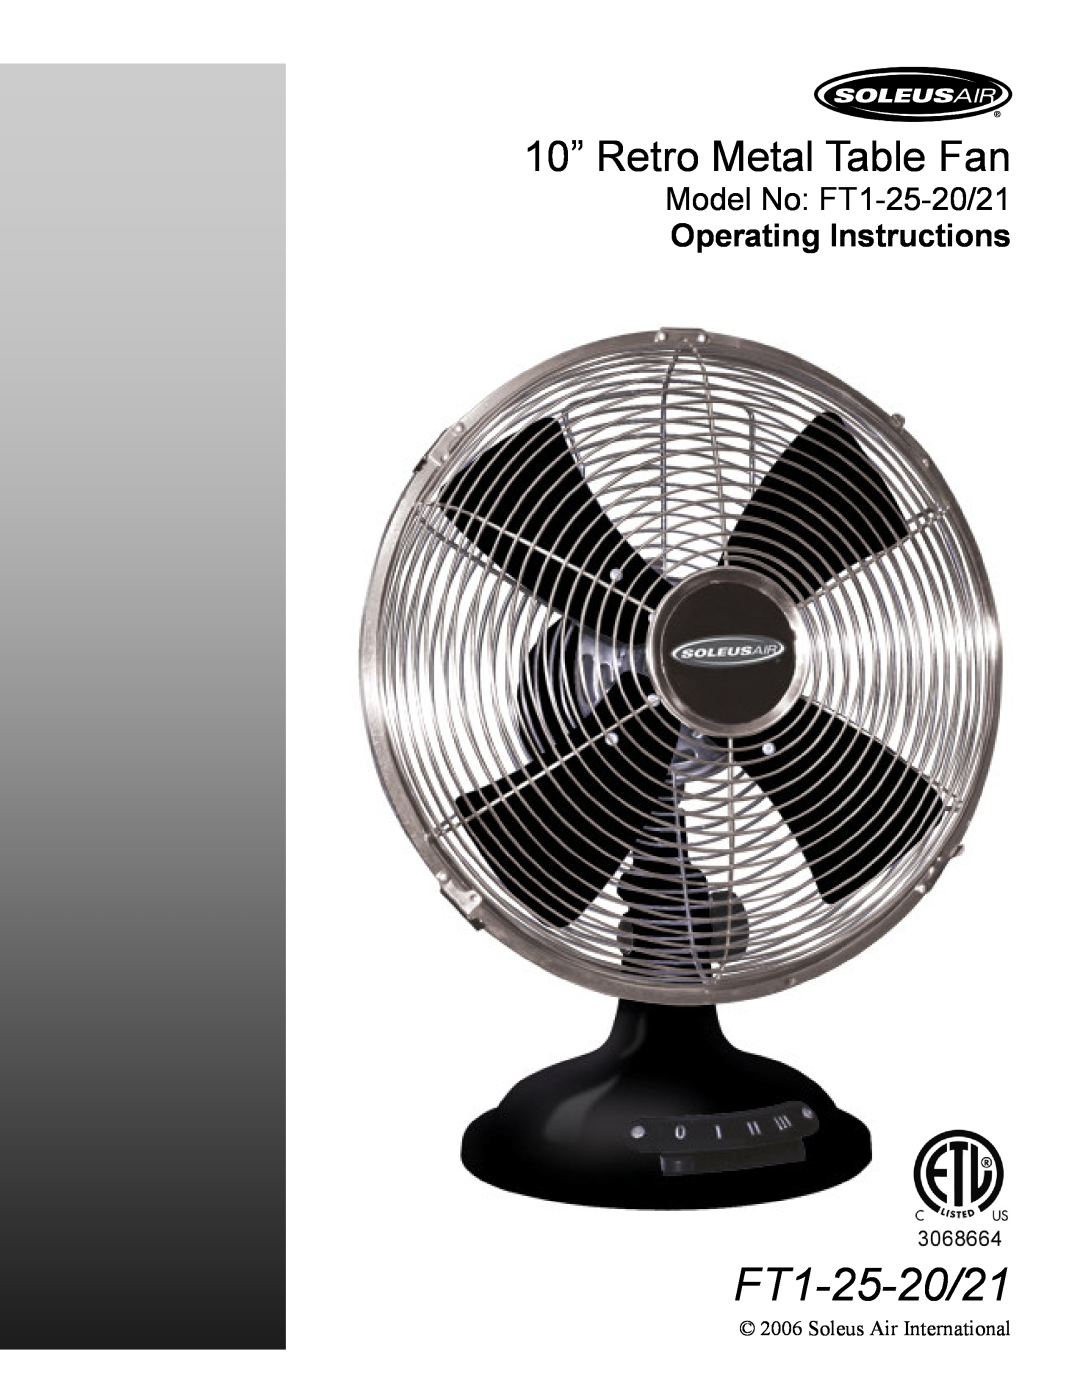 Soleus Air manual 10” Retro Metal Table Fan, Model No FT1-25-20/21 Operating Instructions 